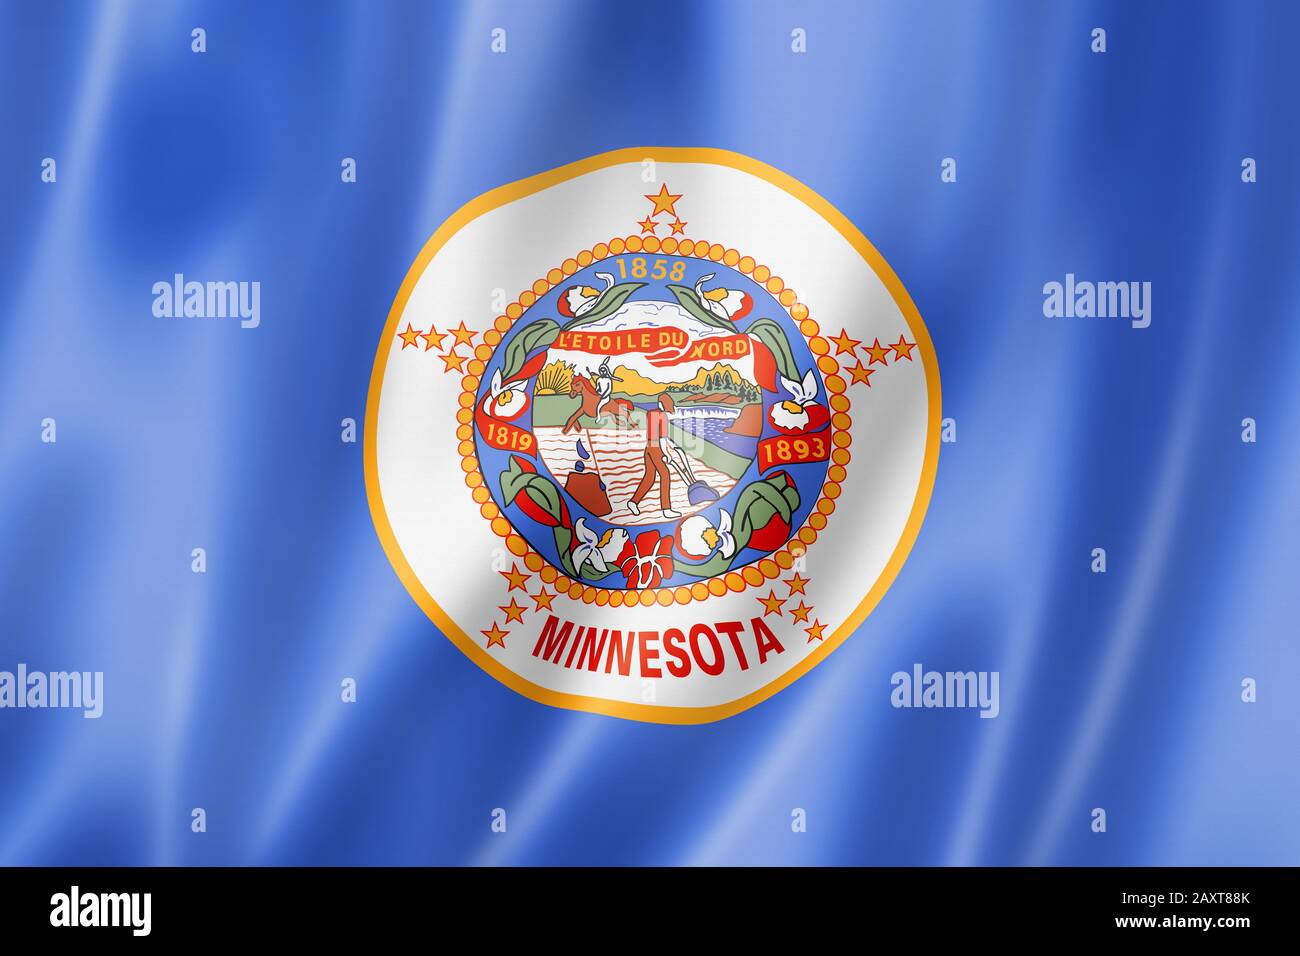 Minnesota flag, united states waving banner collection. 3D illustration Stock Photo